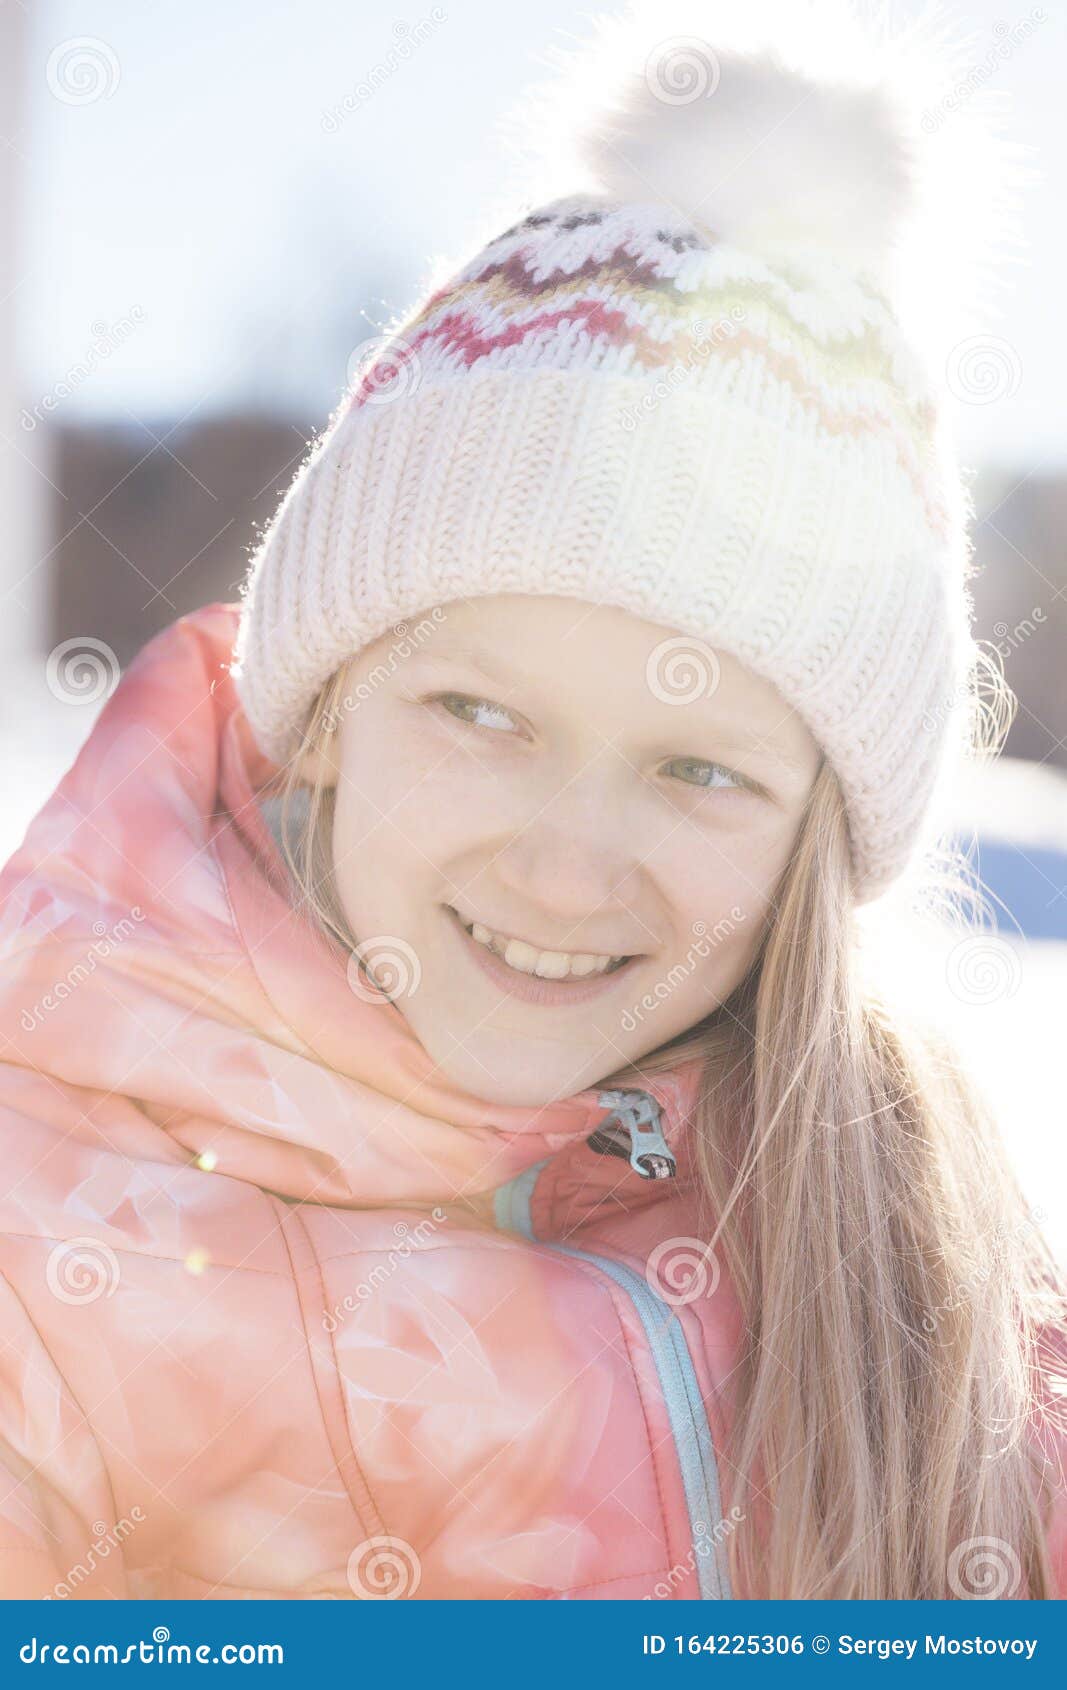 Norwegian girl smiling stock photo. Image of person - 164225306